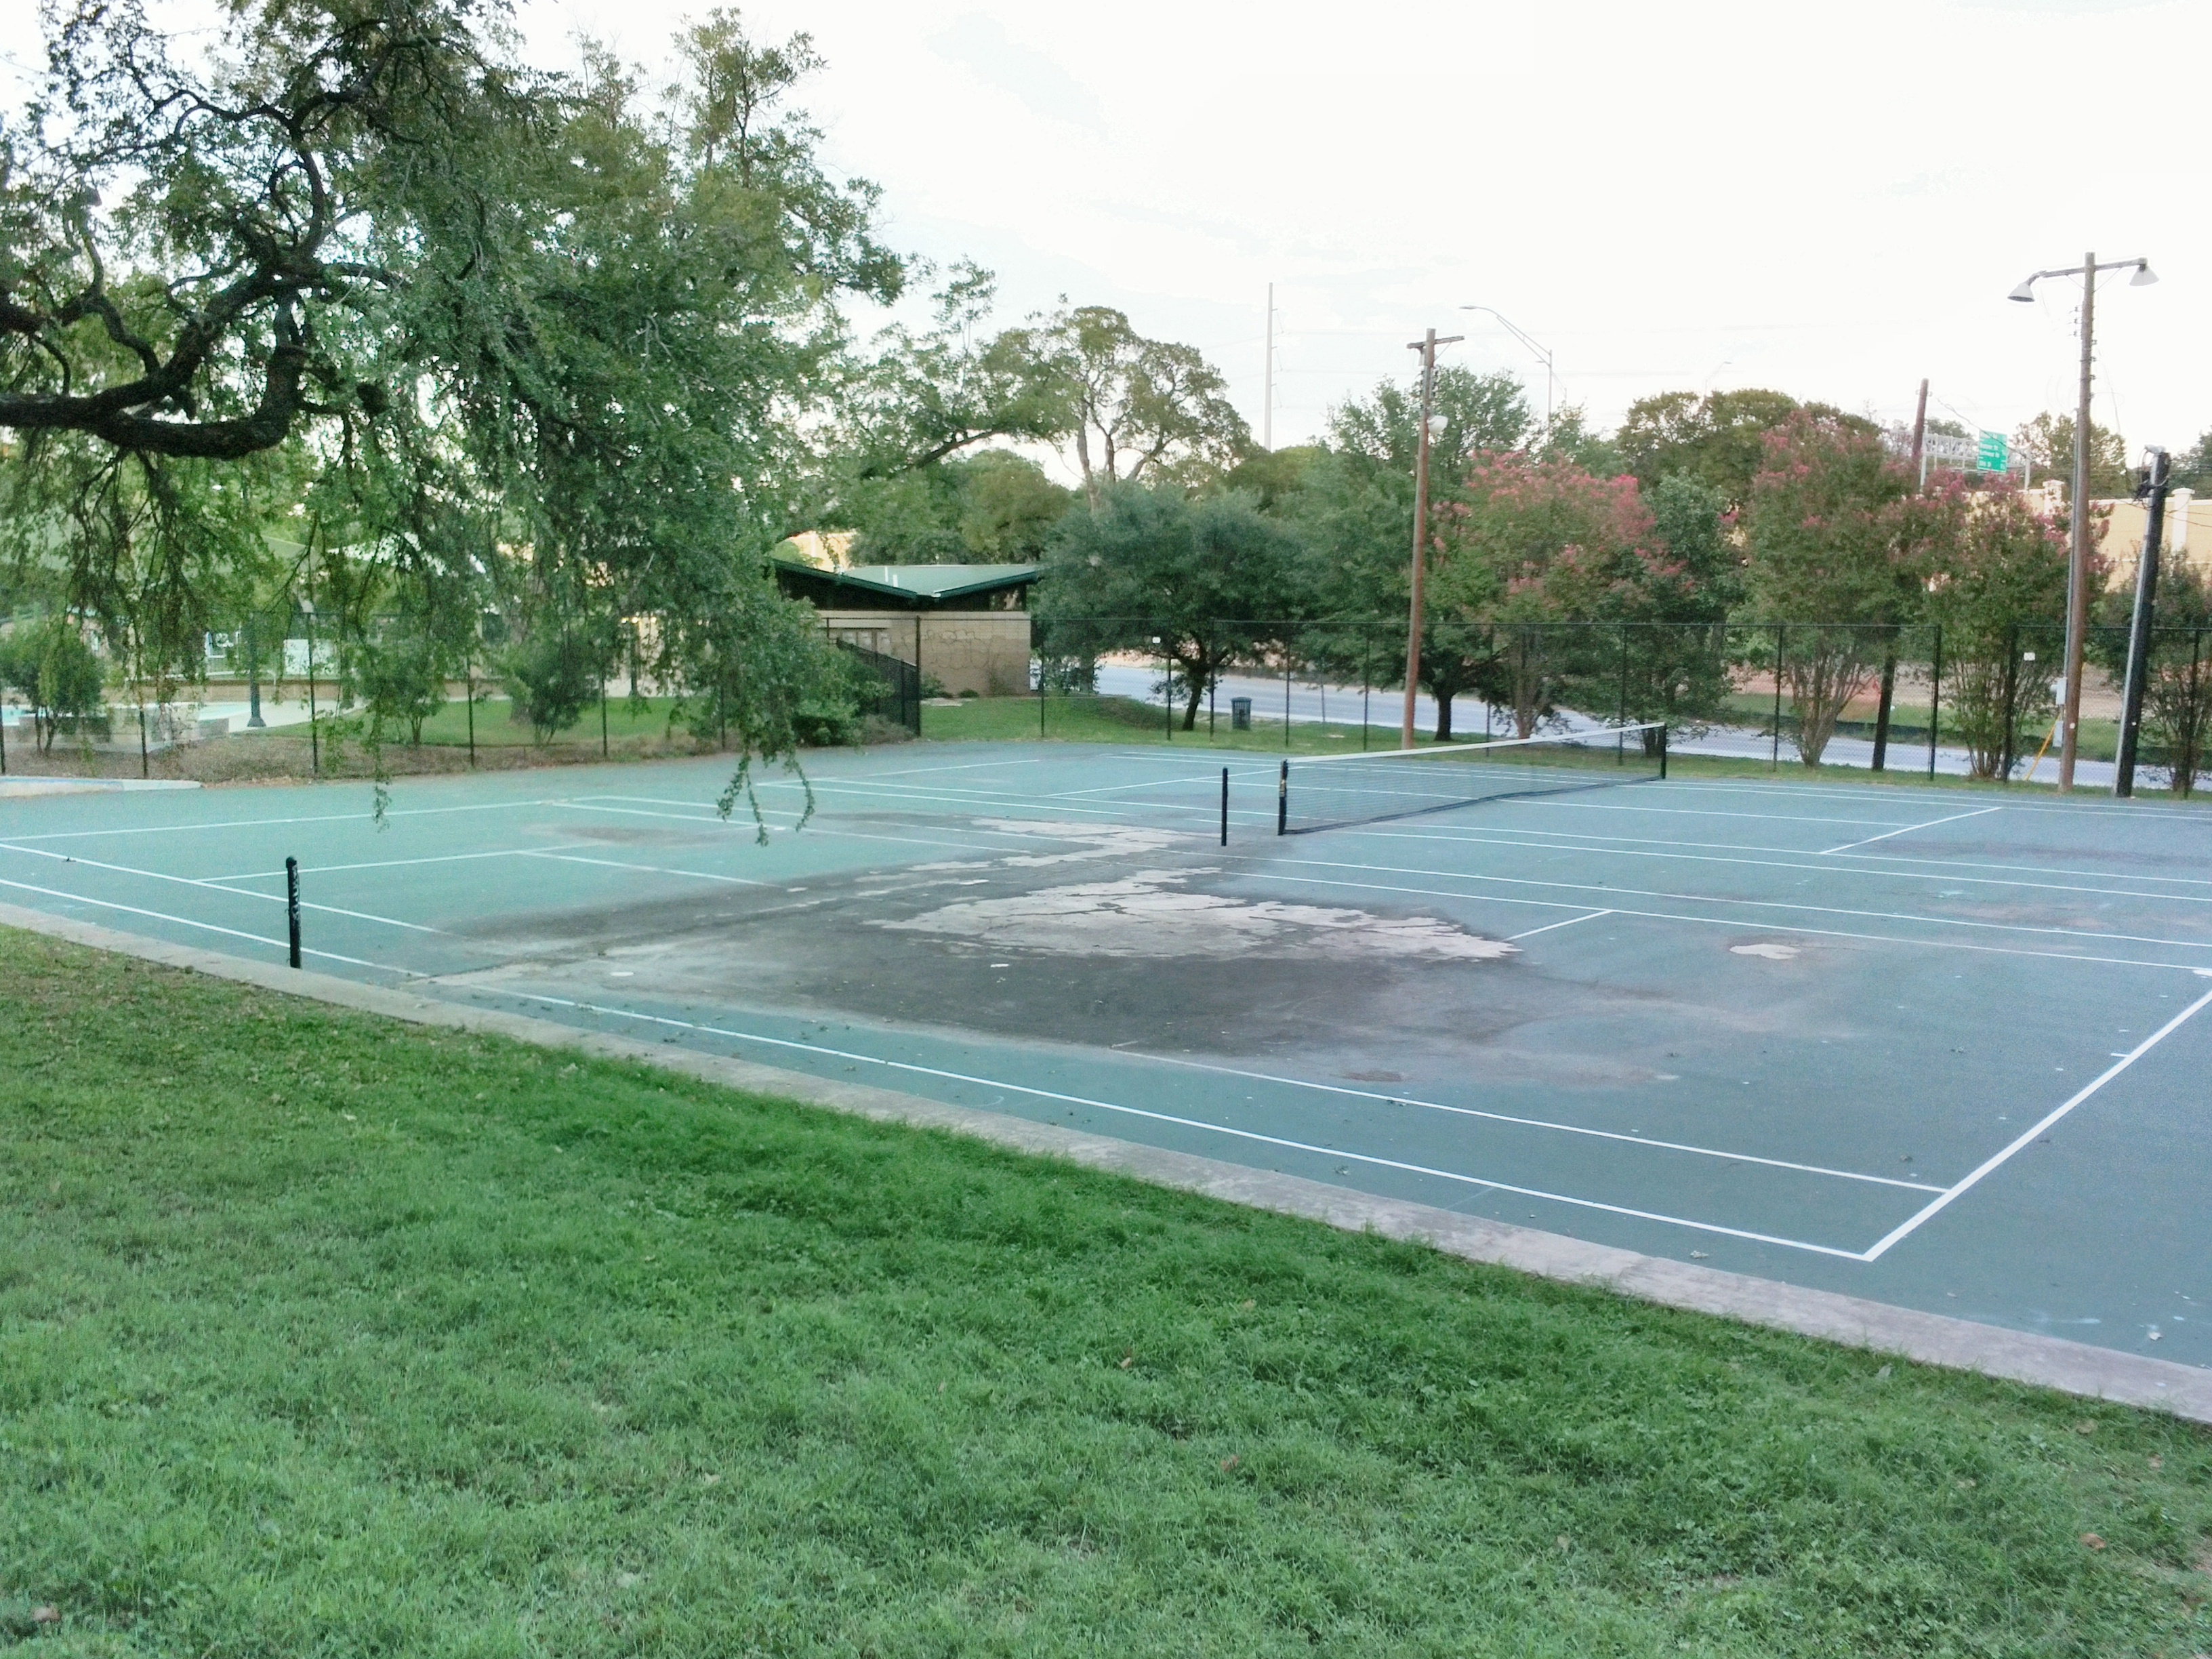 Tennis courts at Westenfield Neighborhood Park.